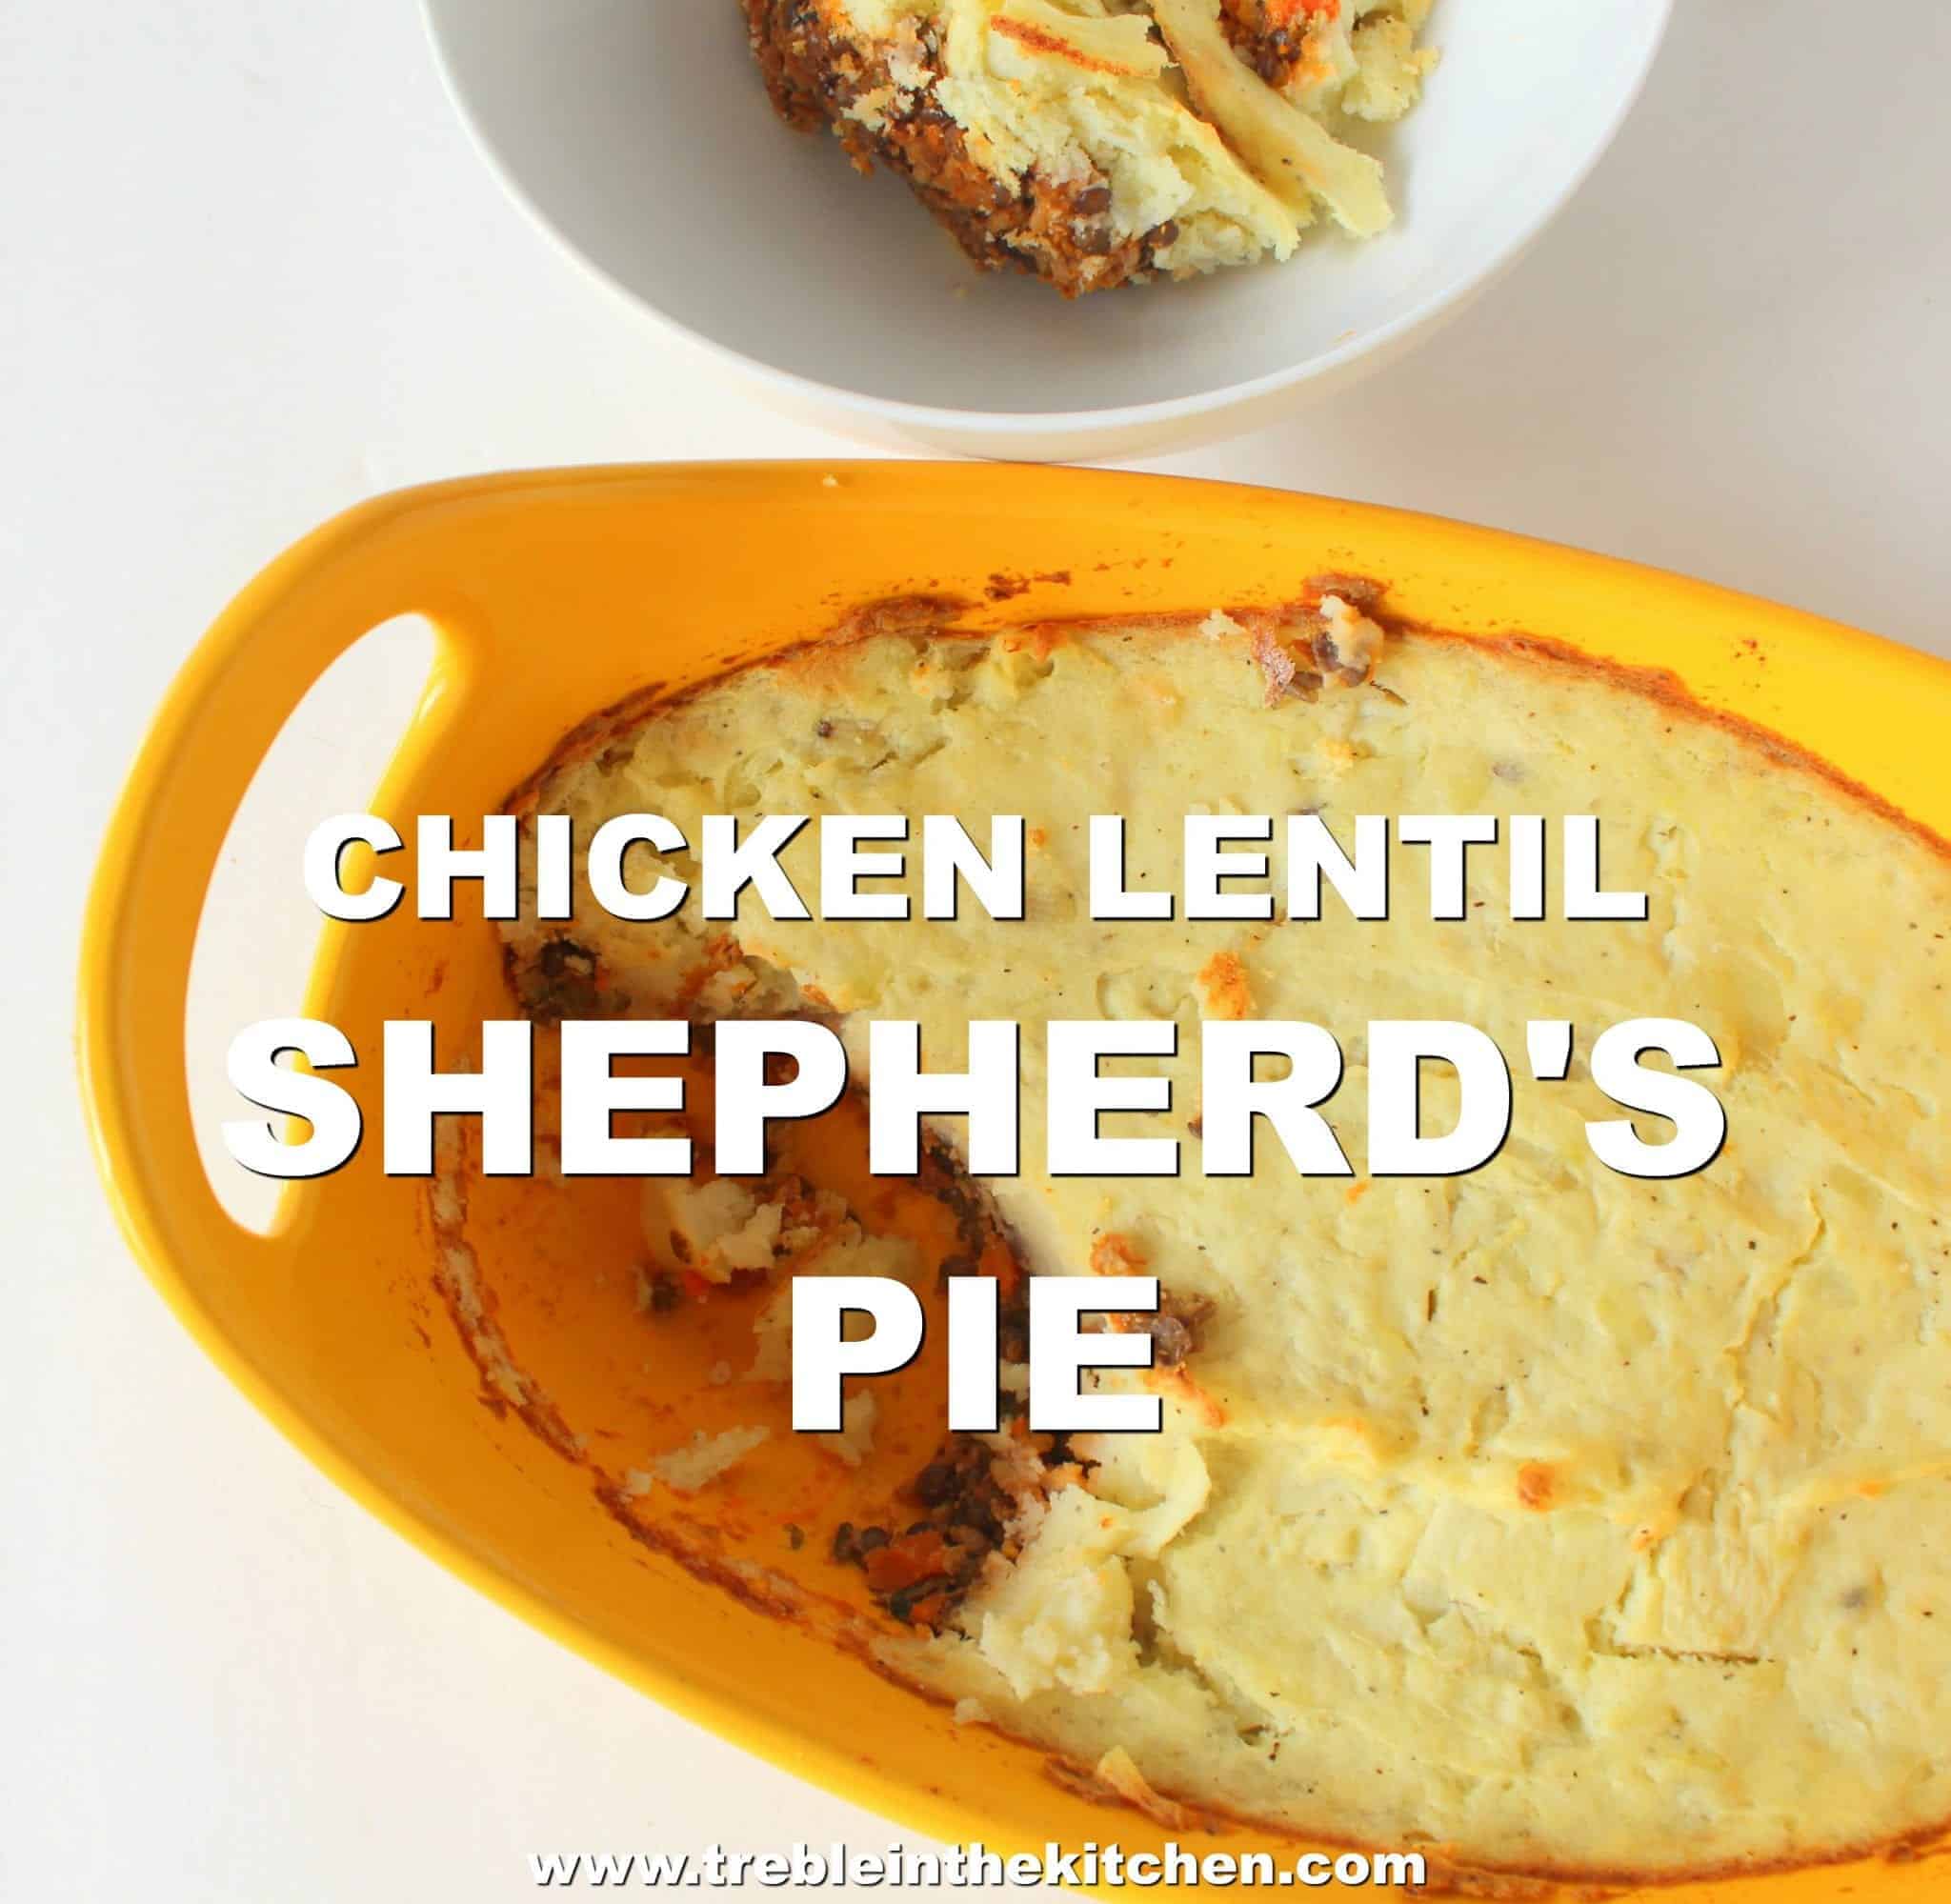 Chicken Lentil Shepherd's Pie from Treble in the Kitchen